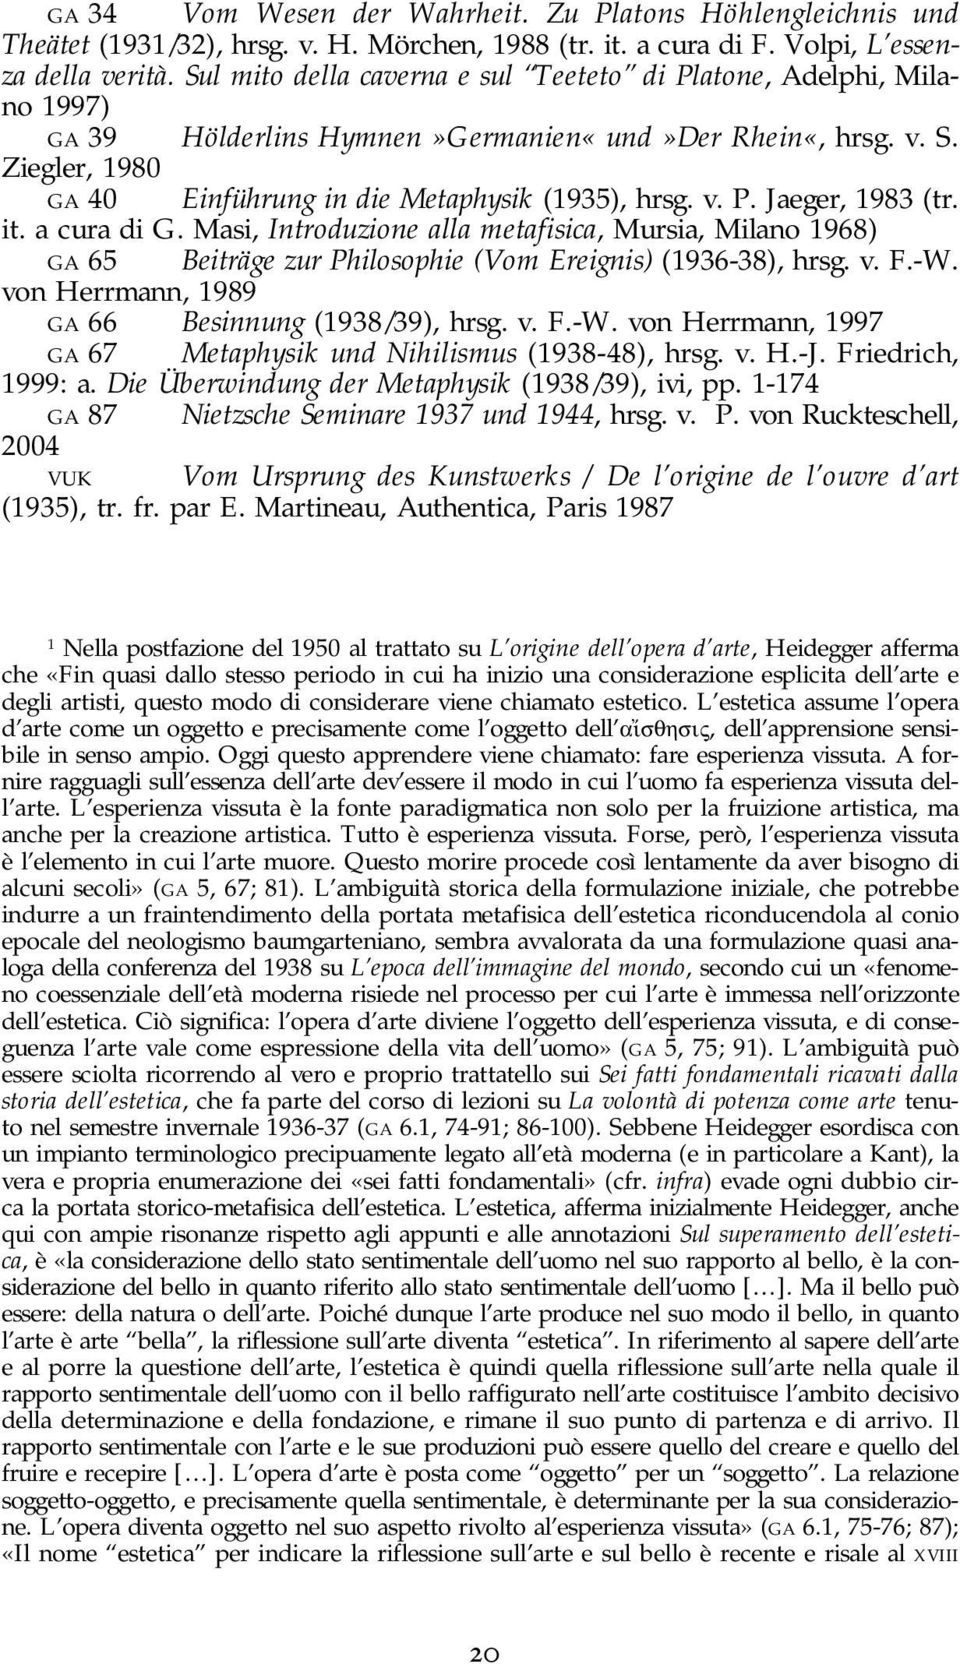 it. a cura di G. Masi, Introduzione alla metafisica, Mursia, Milano 1968) GA 65 Beiträge zur Philosophie (Vom Ereignis) (1936-38), hrsg. v. F.-W.